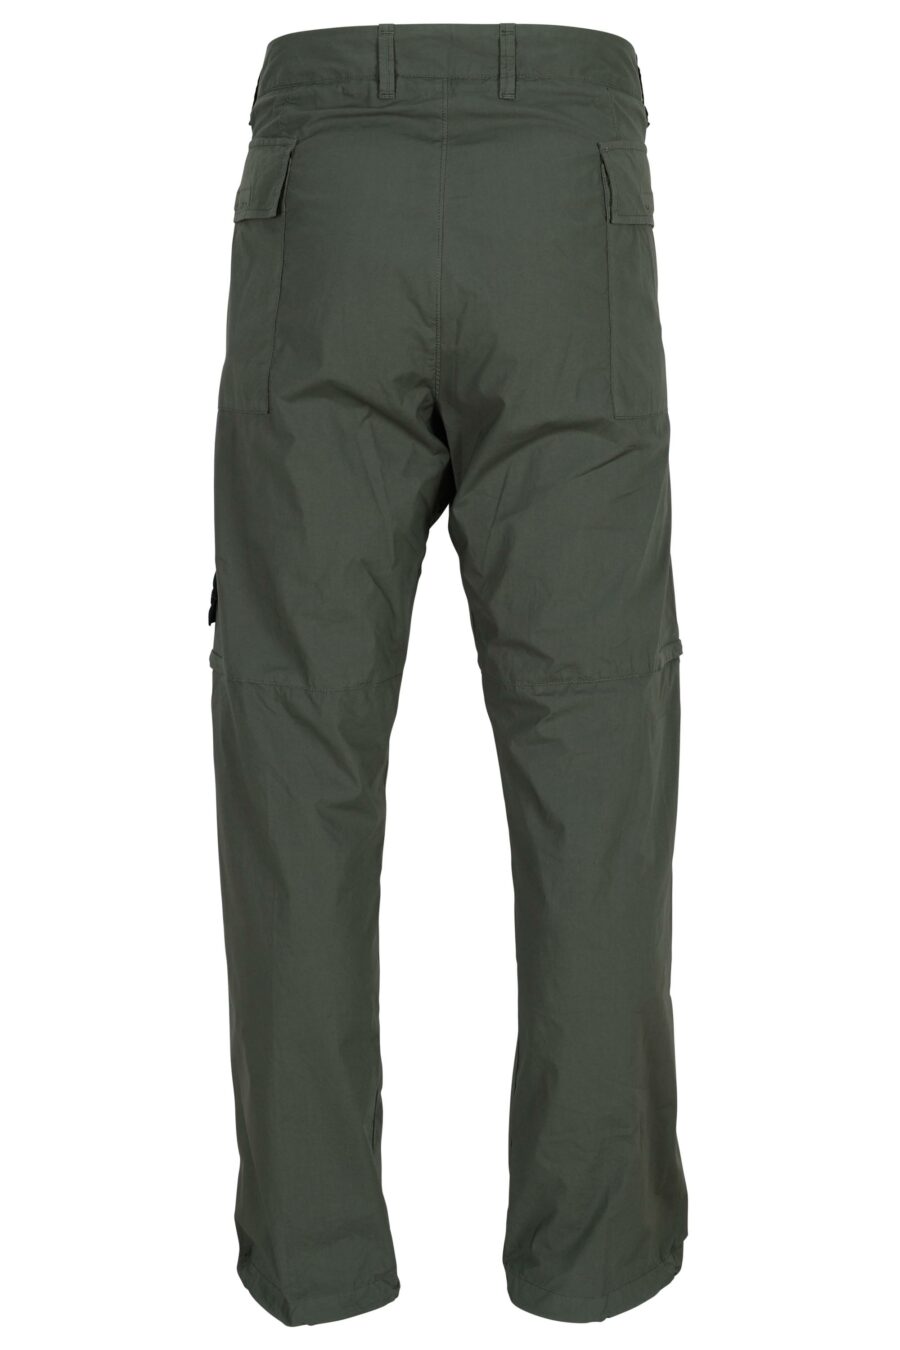 Militärgrüne "normale" Hose mit Logo-Kompass-Aufnäher - 8052572955013 1